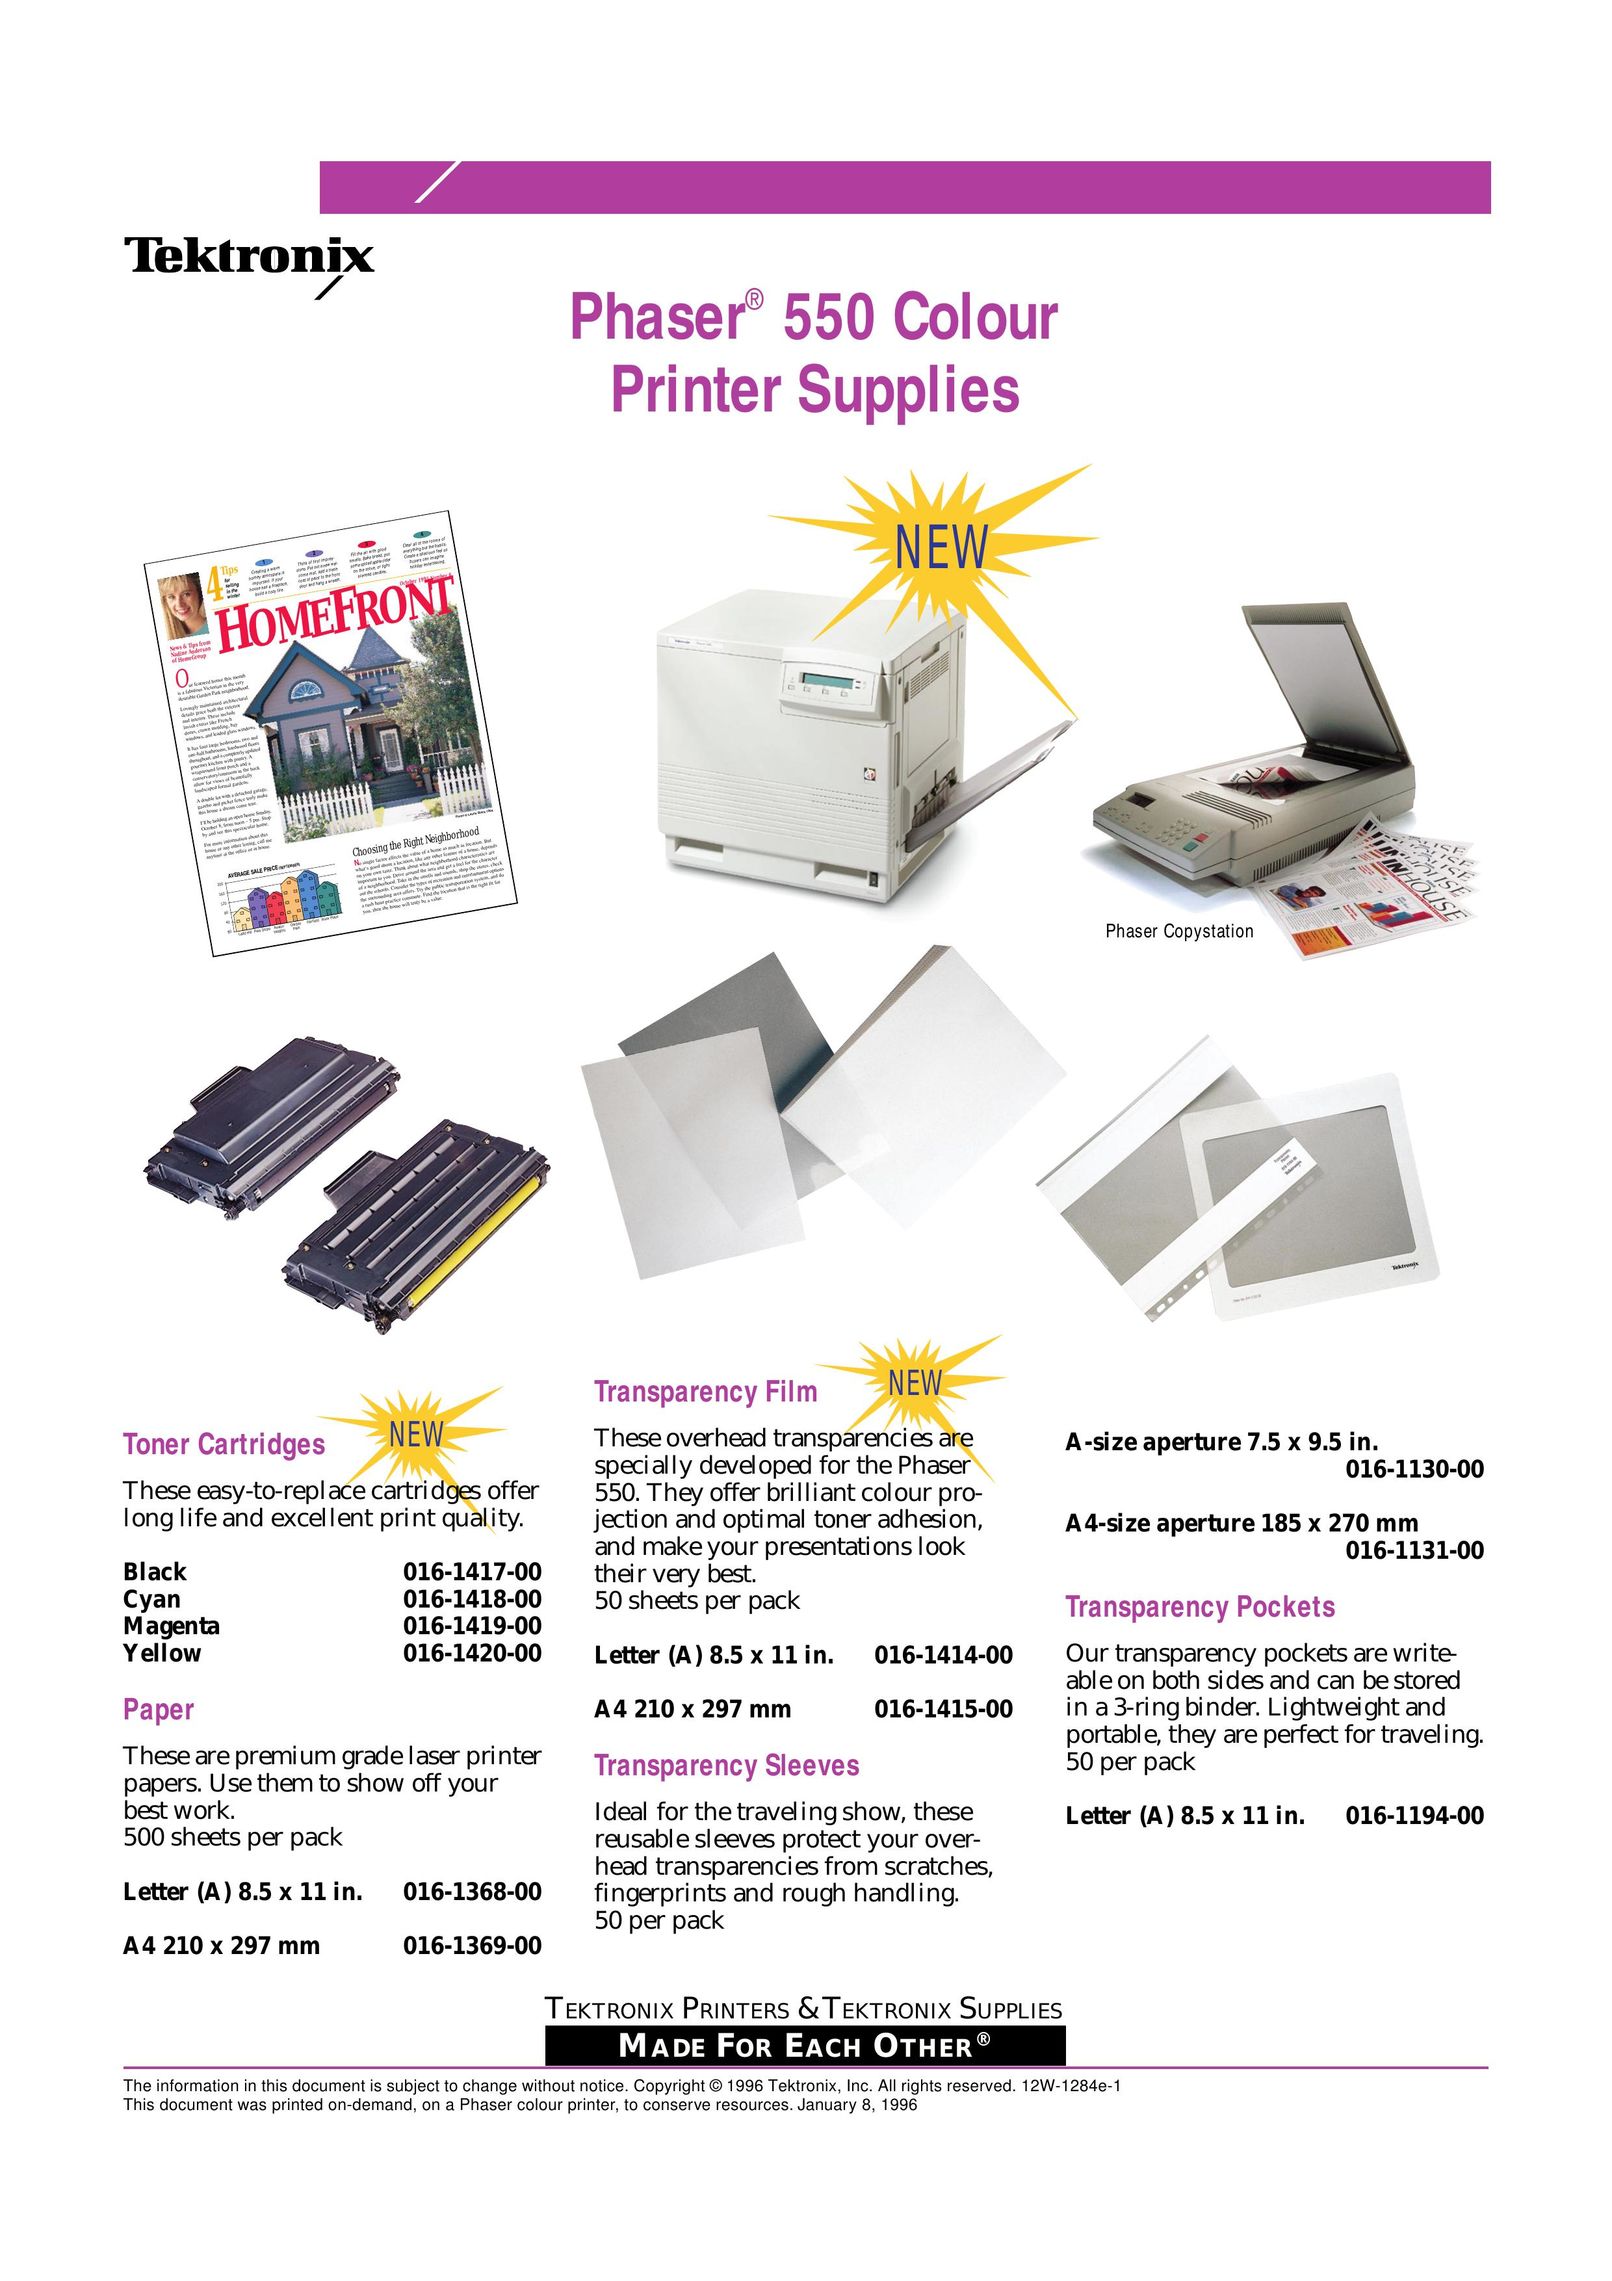 Xerox 016-1368-00 Printer Accessories User Manual